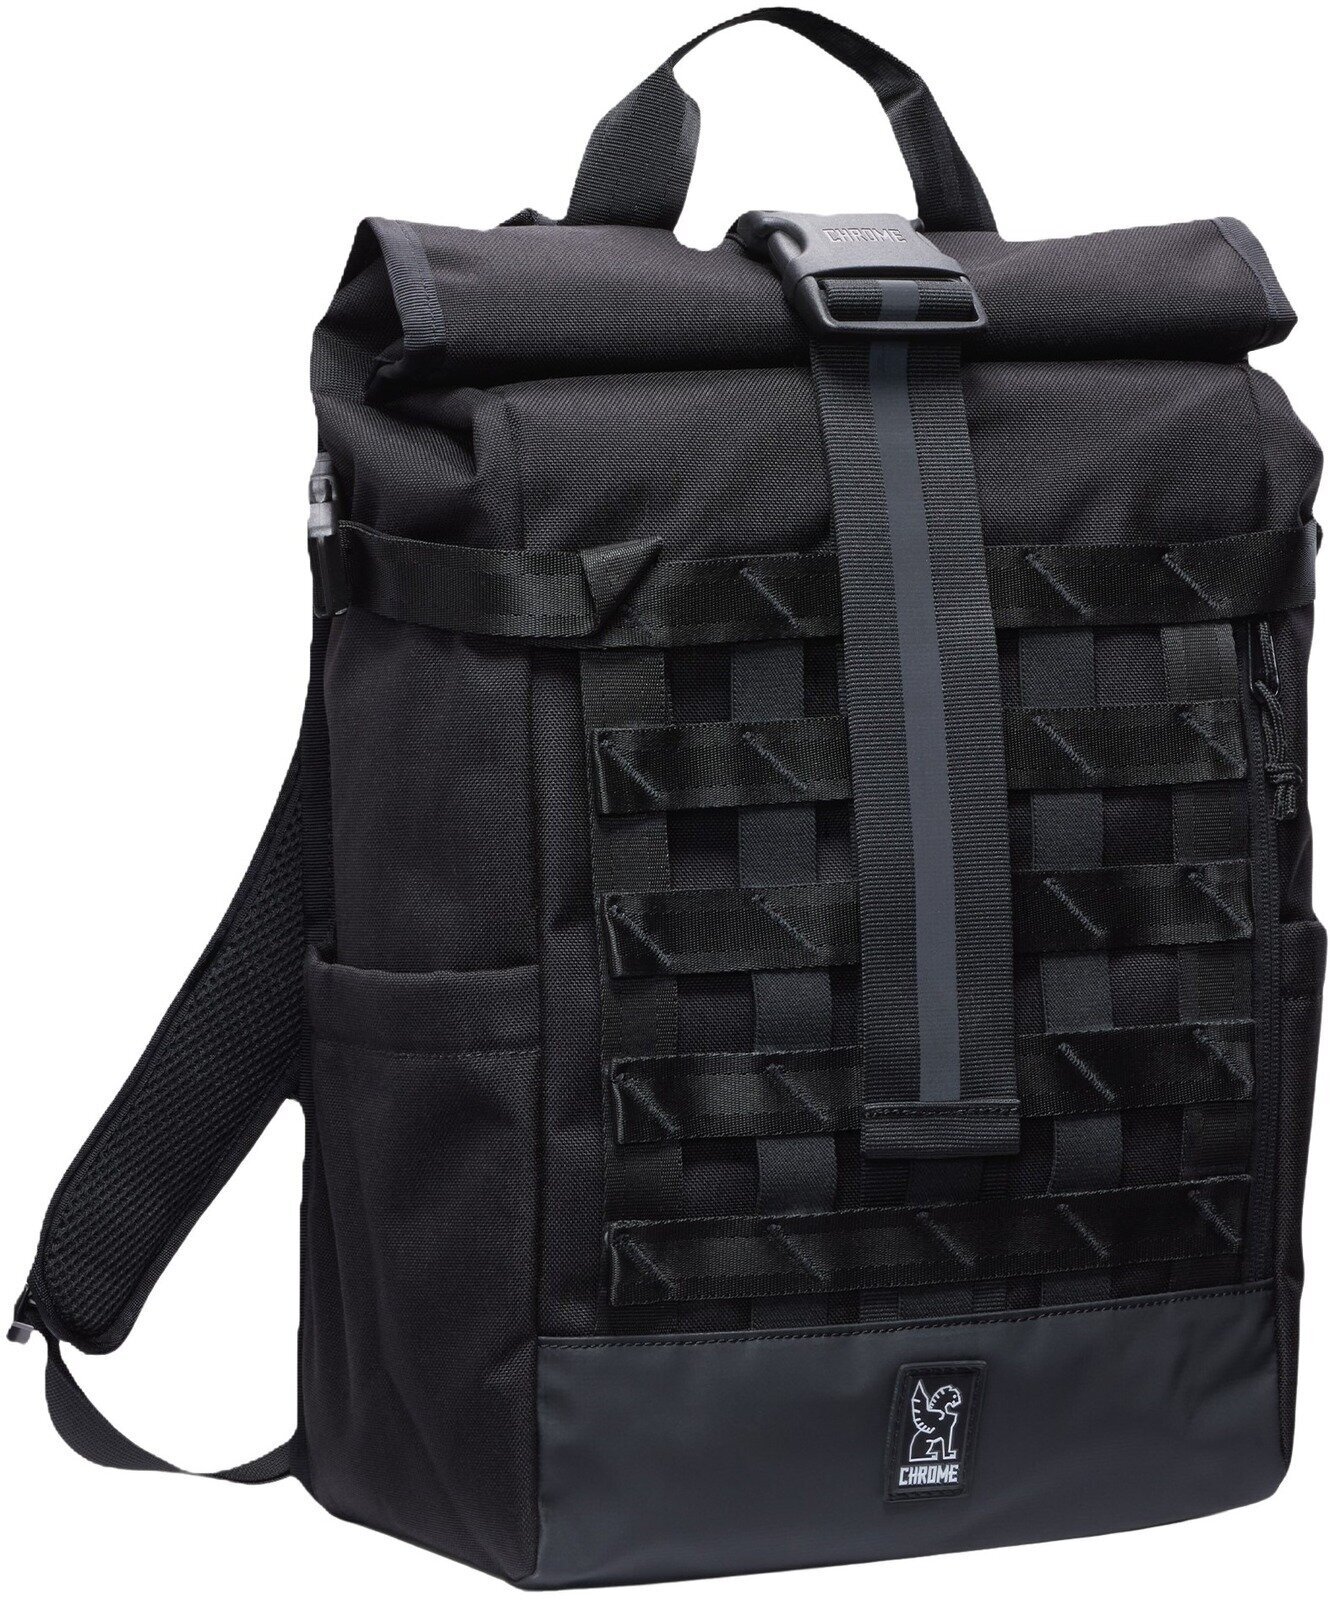 Mochila/saco de estilo de vida Chrome Barrage Backpack Black 18 L Mochila